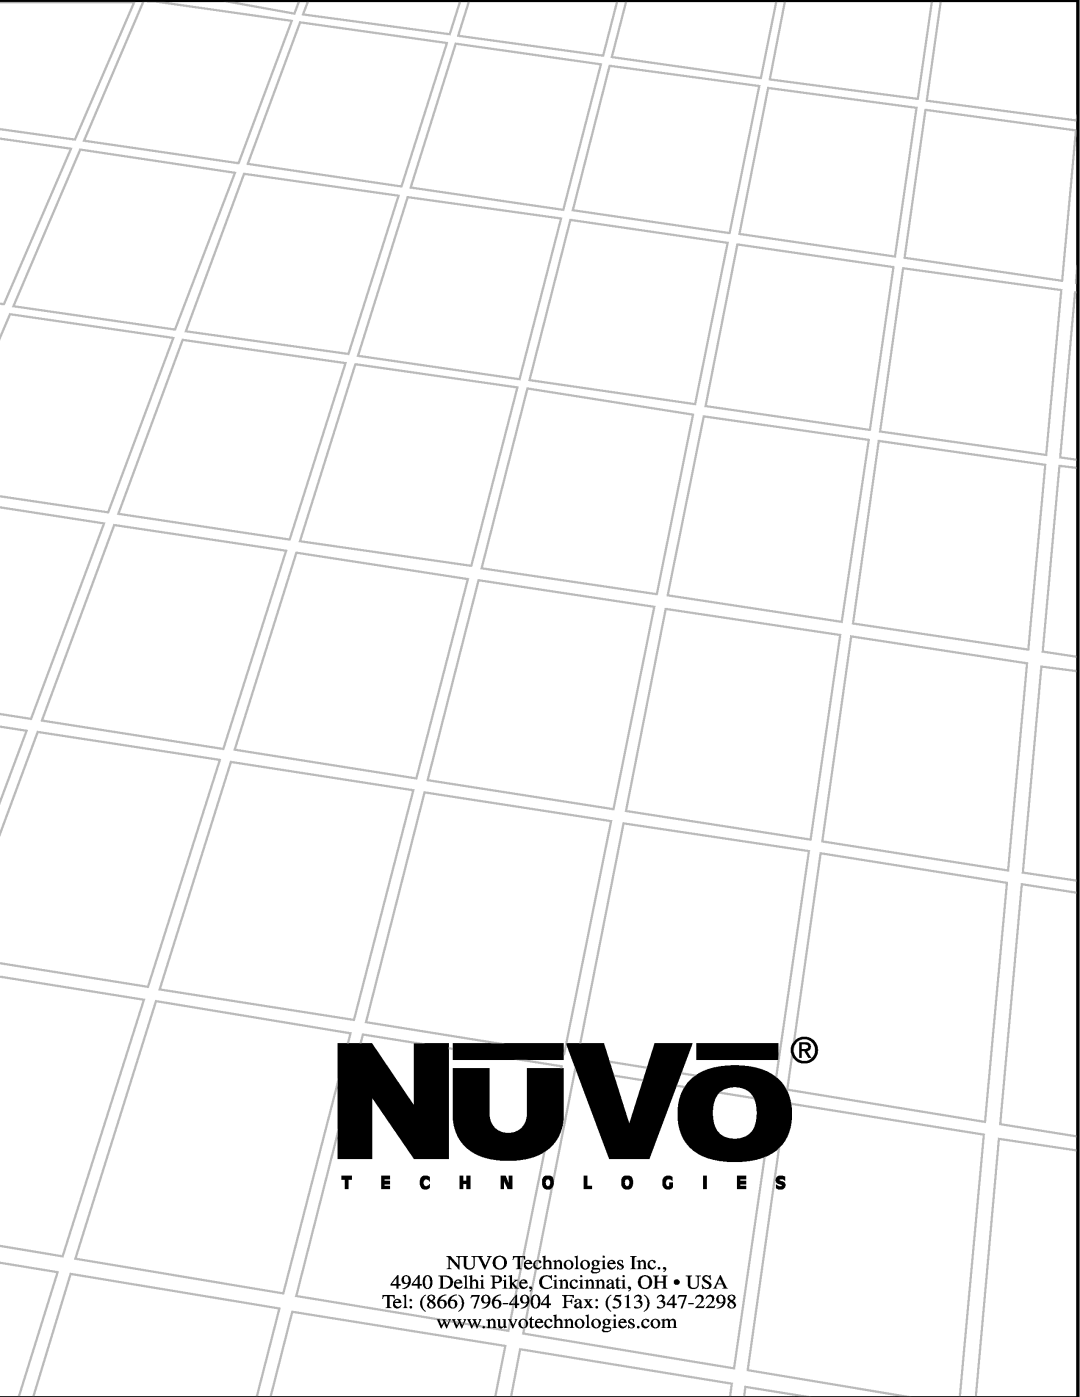 Nuvo NV-E6XS, NV-E6MS manual NUVO Technologies Inc, Delhi Pike, Cincinnati, OH USA, Tel 866 796-4904Fax 